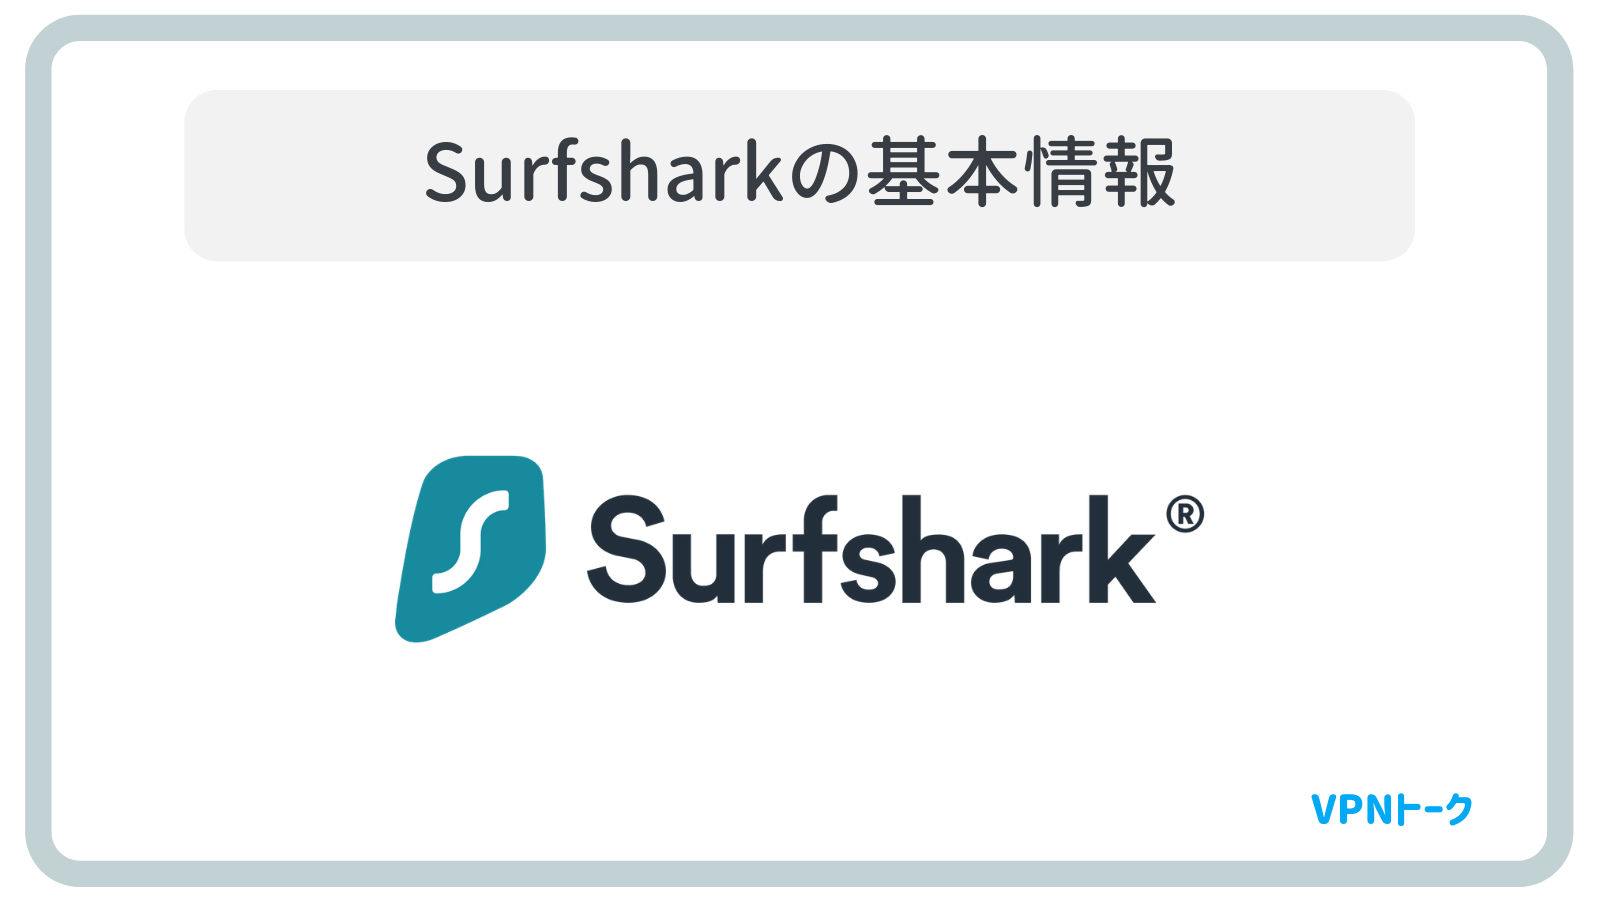 Surfsharkの基本情報